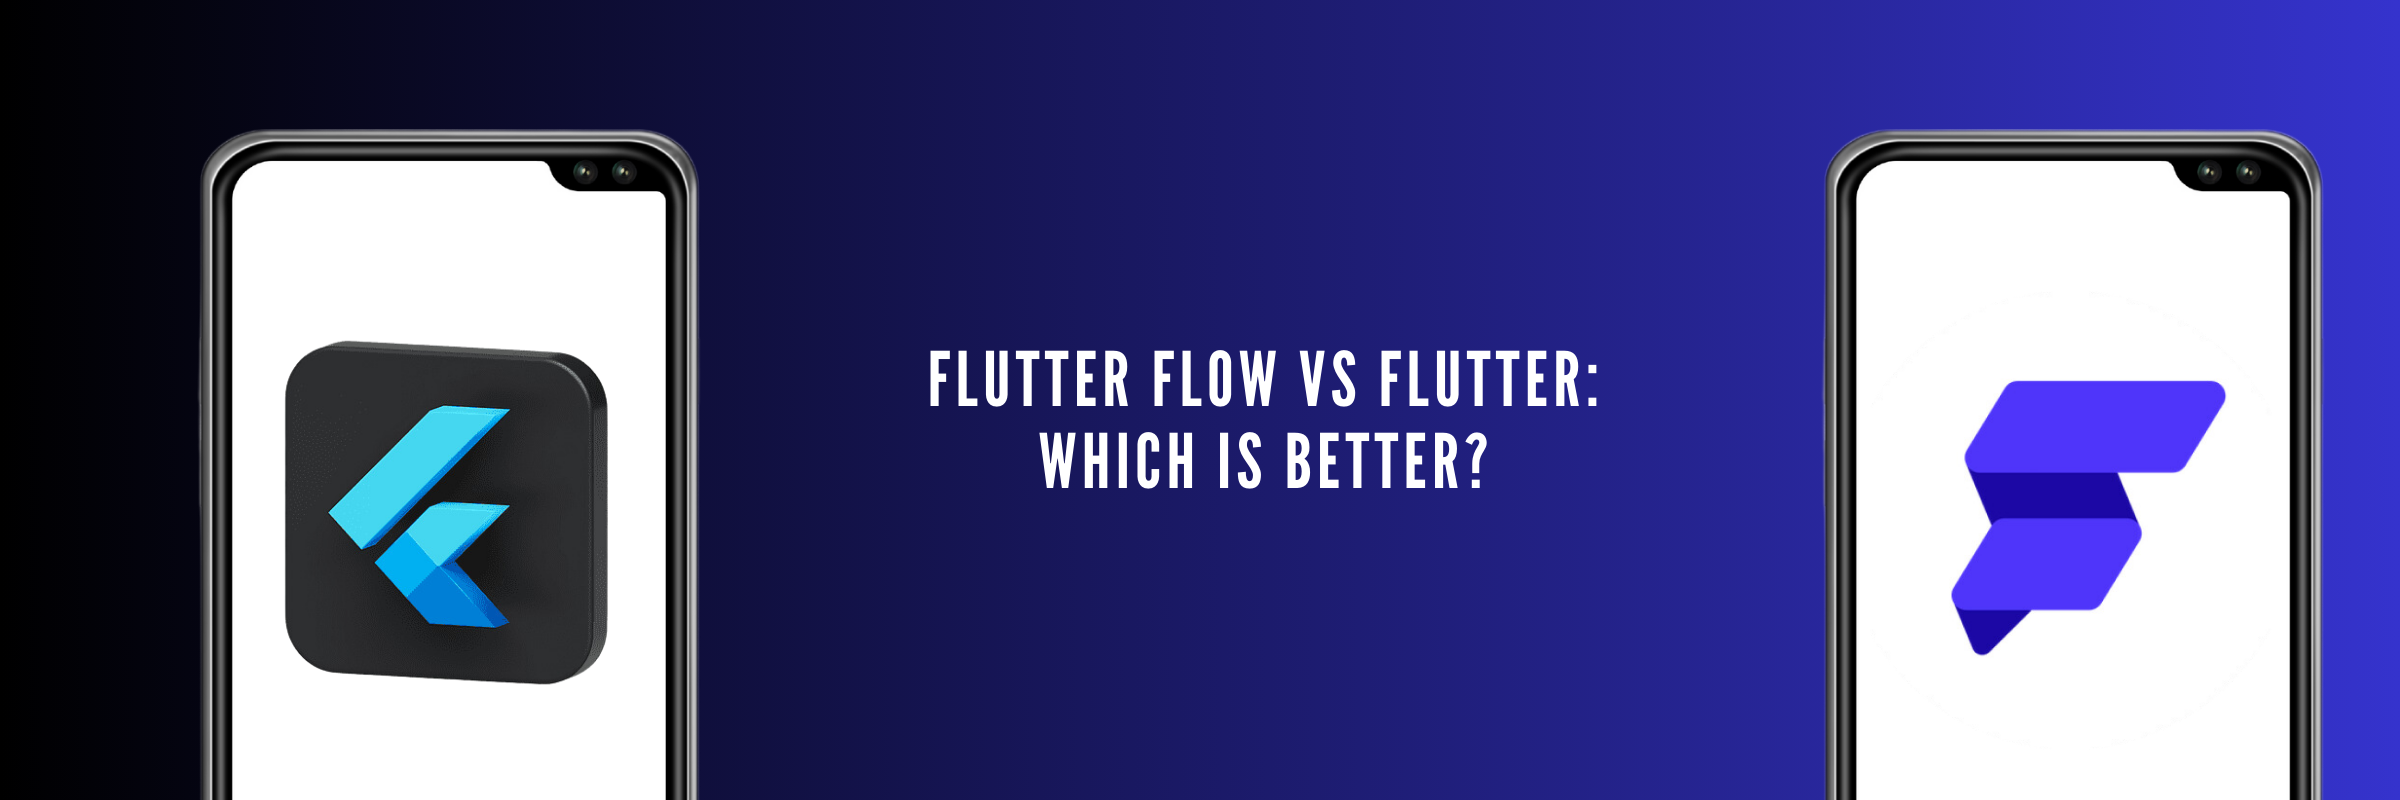 Flutter Flow vs Flutter: Which is Better?